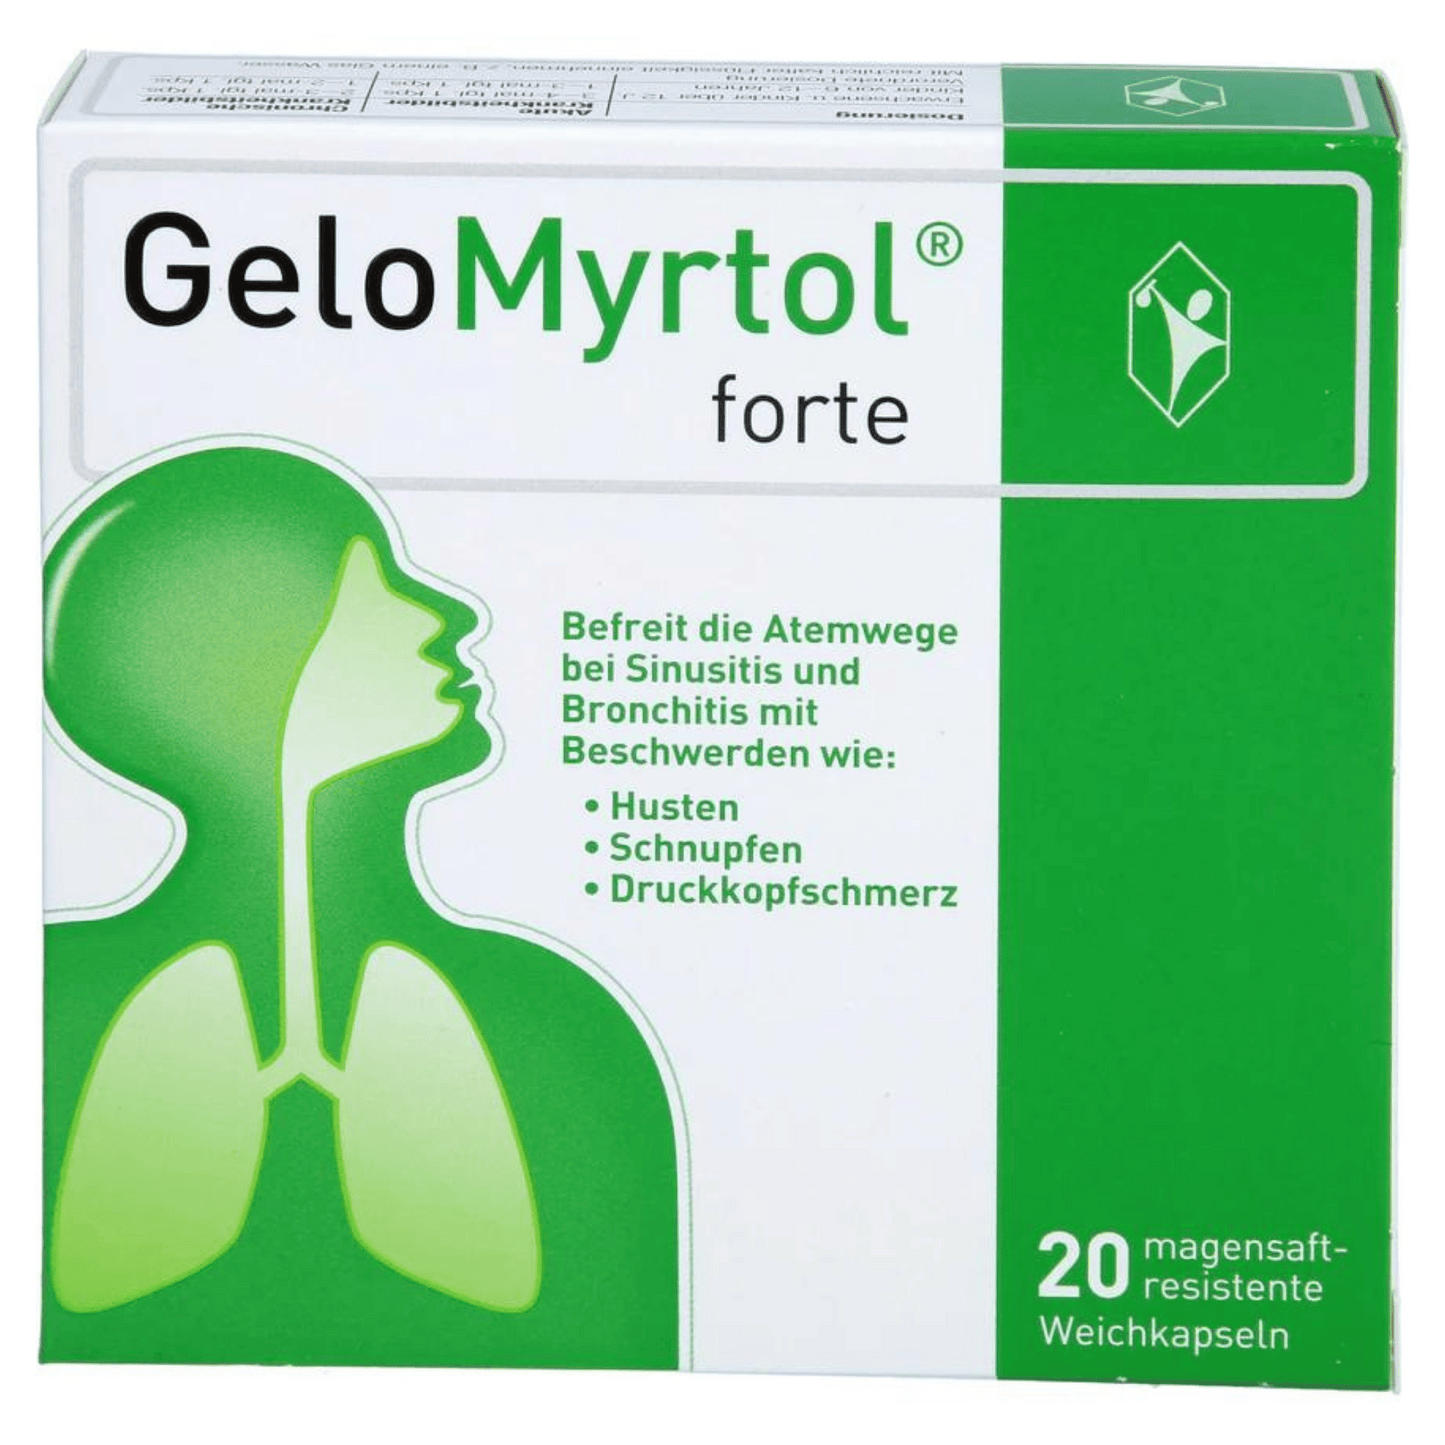 Primary Image of GeloMyrtol Forte